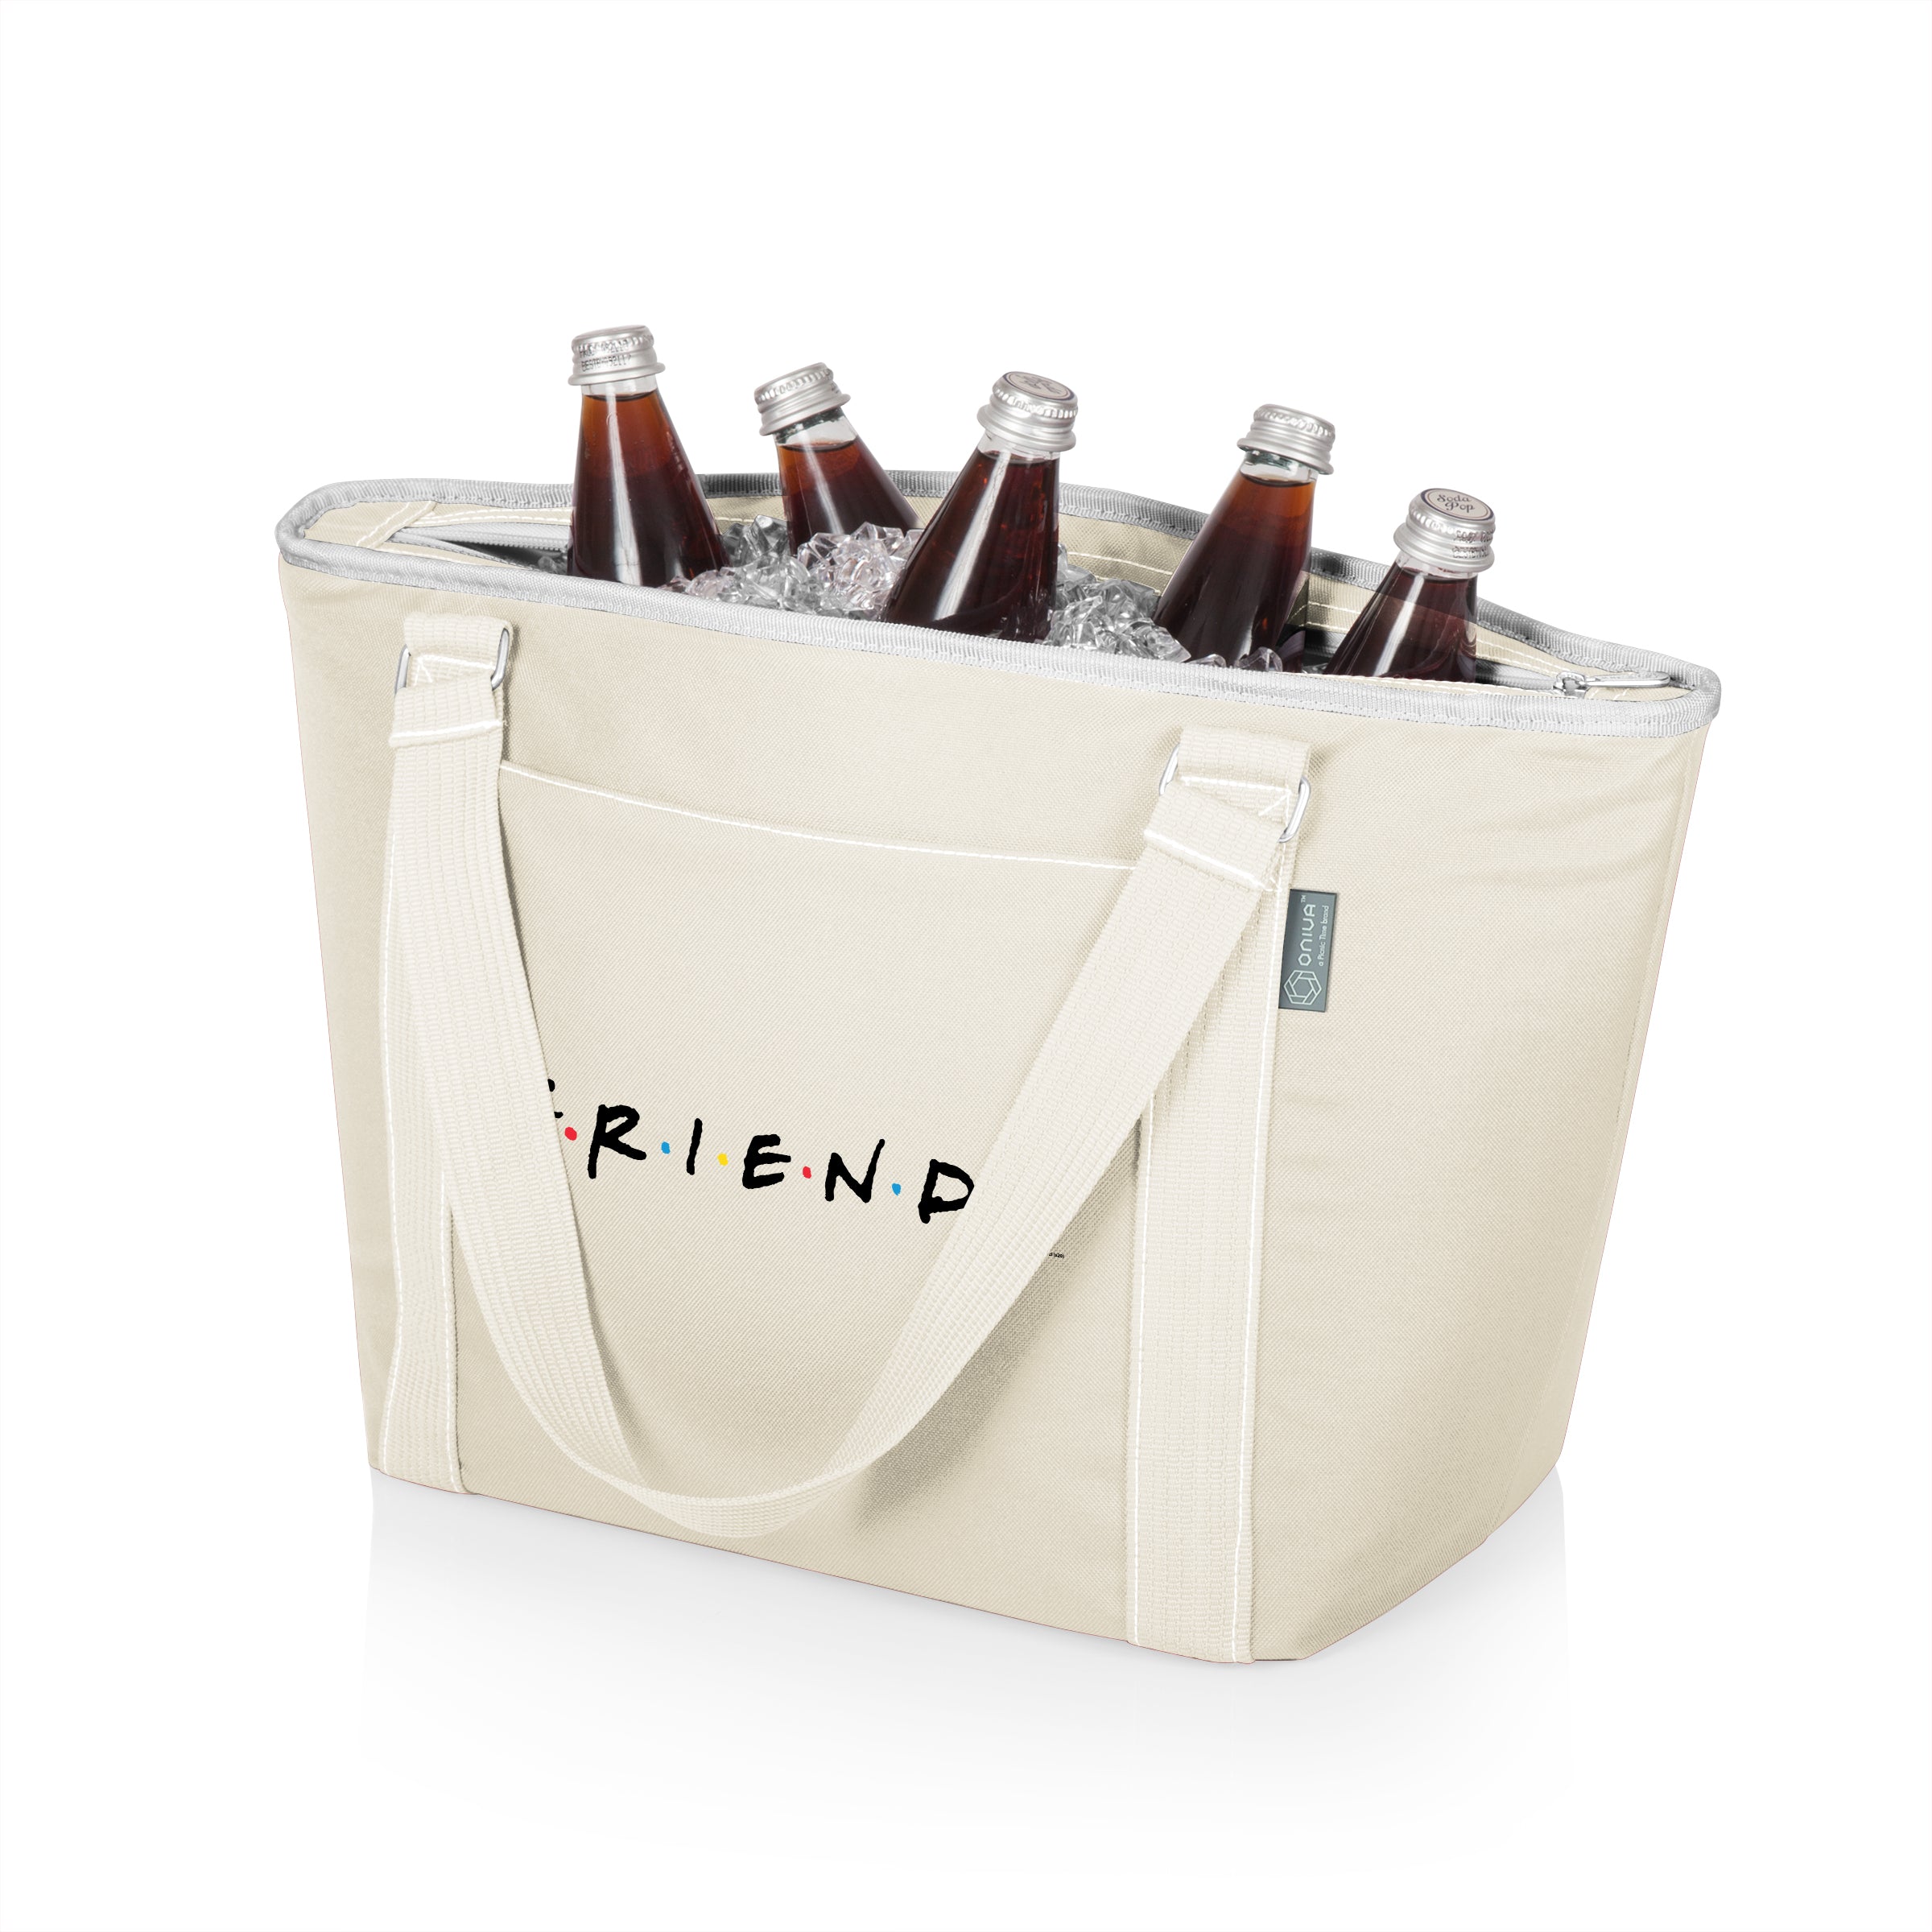 Friends - Topanga Cooler Tote Bag